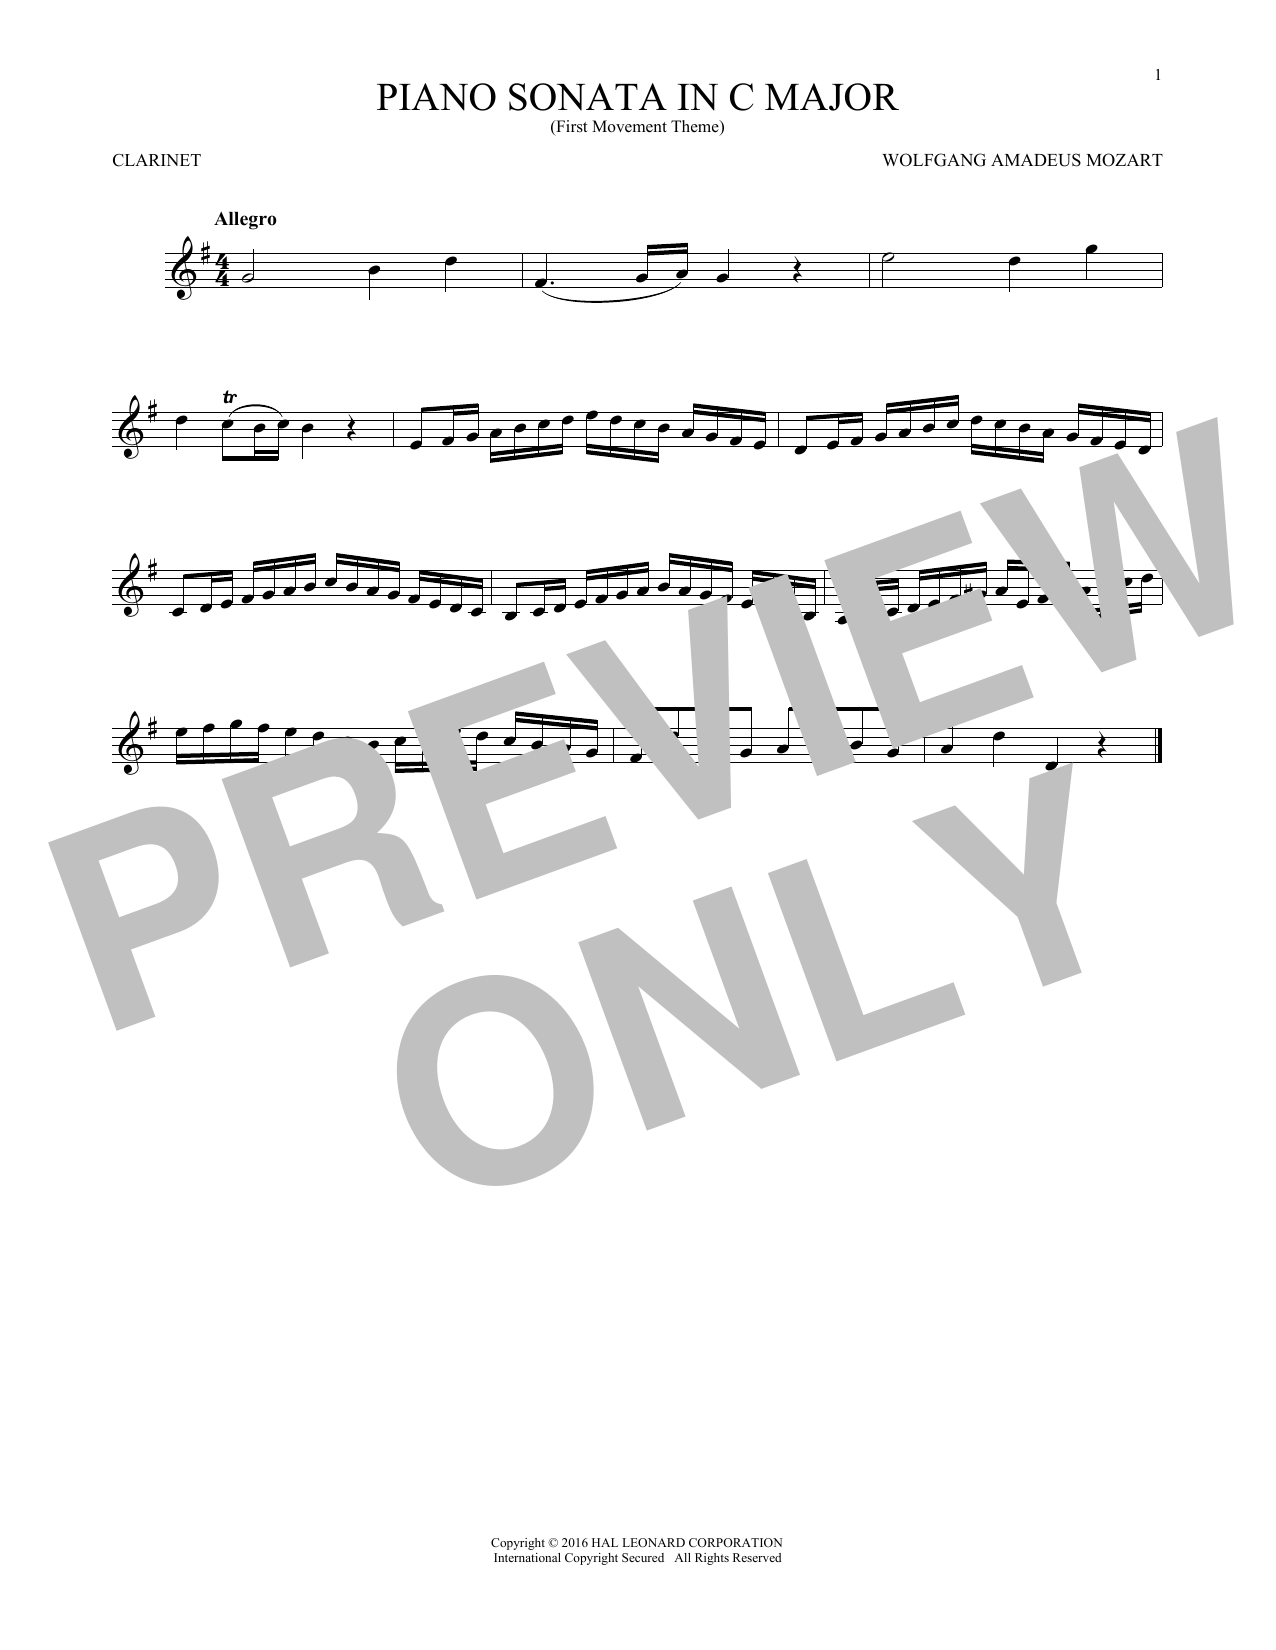 Wolfgang Amadeus Mozart Piano Sonata In C Major Sheet Music Notes & Chords for Tenor Saxophone - Download or Print PDF